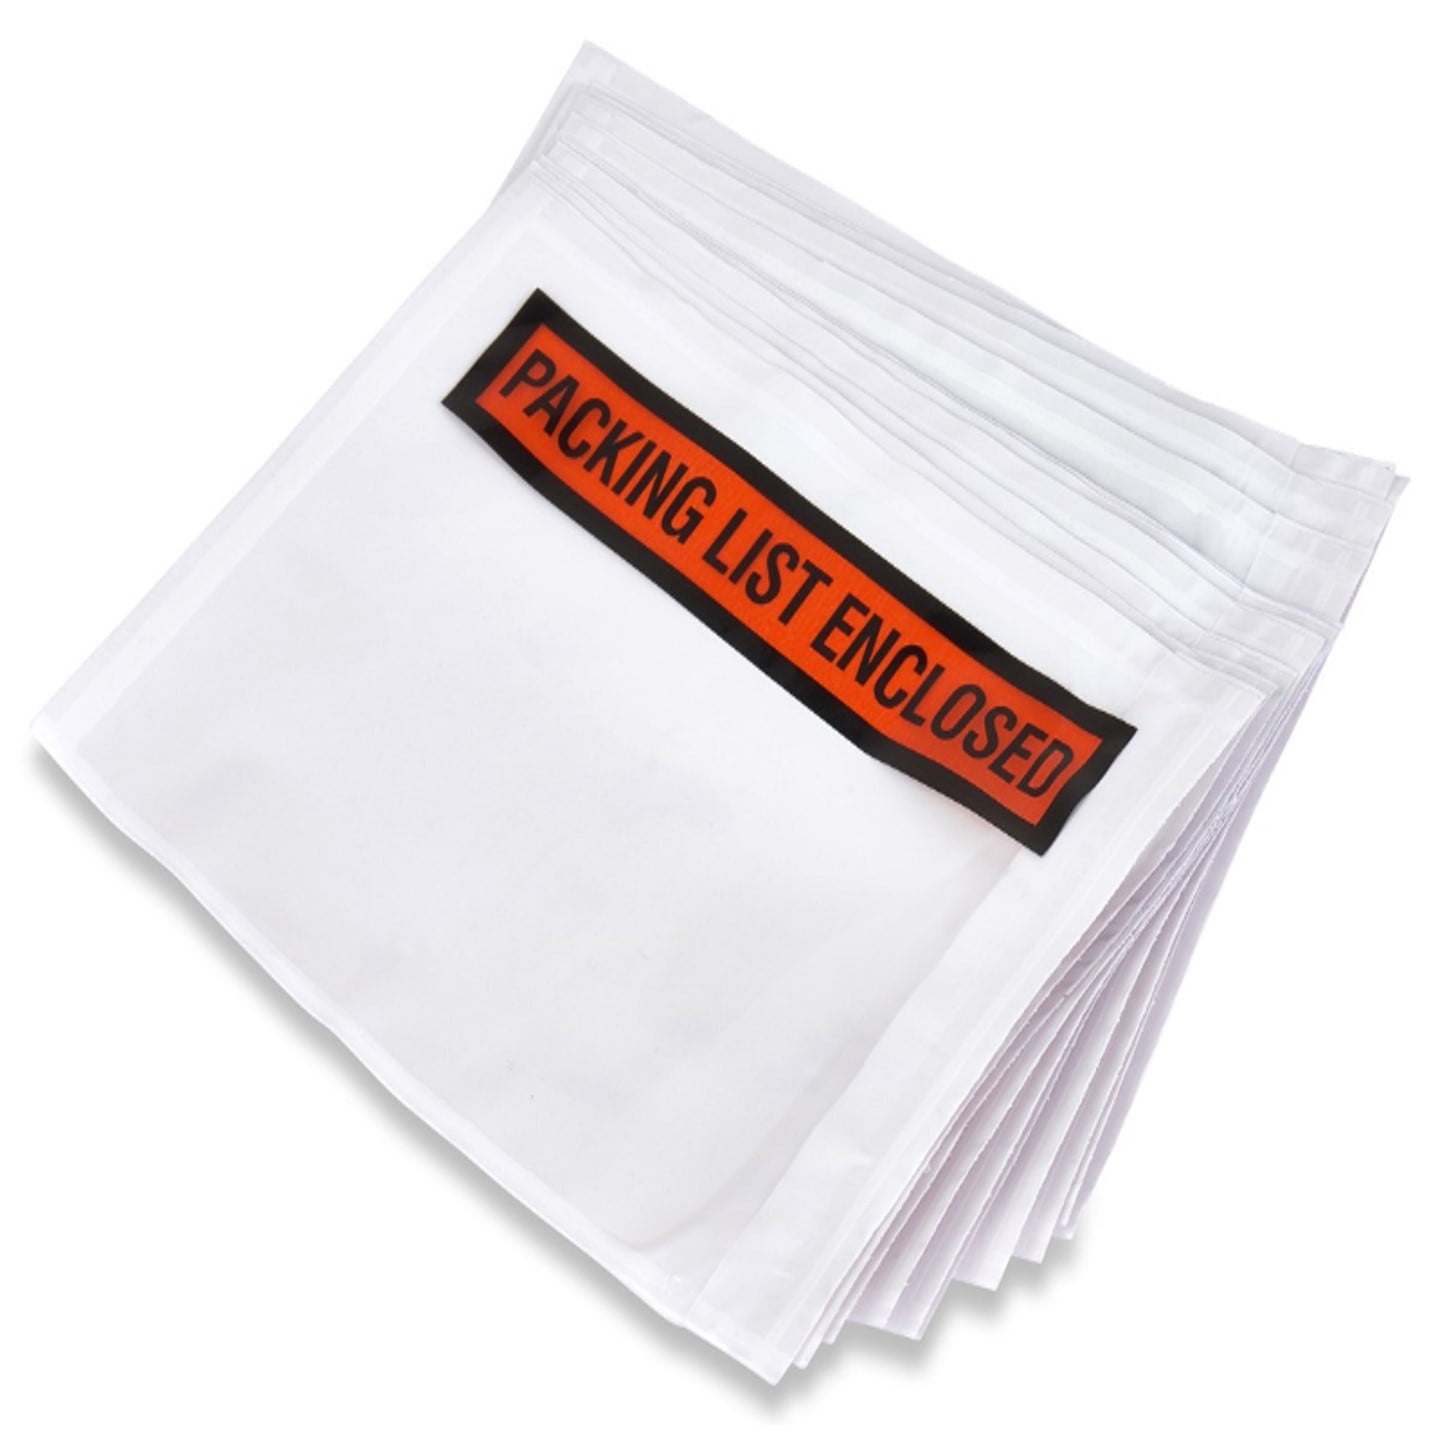 7" x 10" Packing List Envelope Pouch Slip Invoice Receipt 250 COUNT 